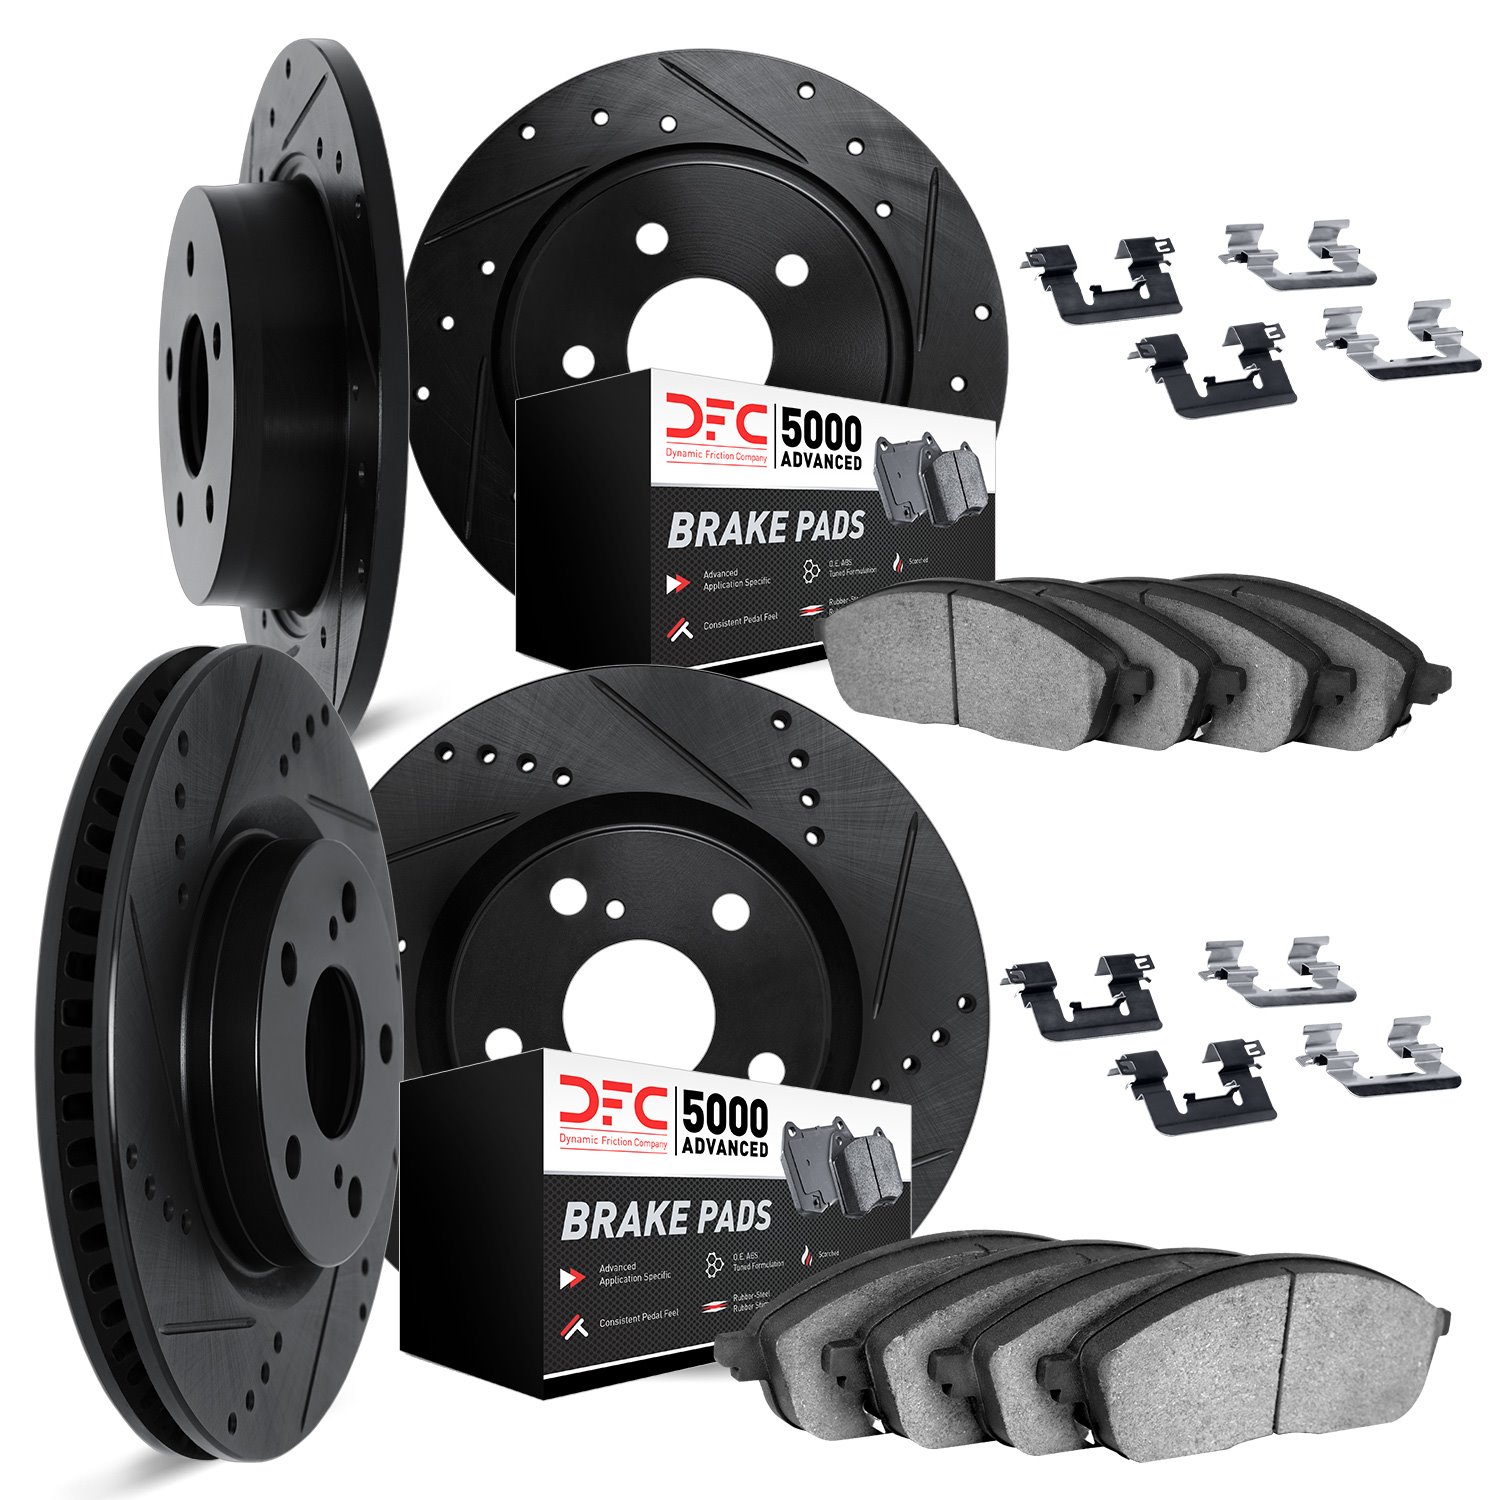 8514-03086 Drilled/Slotted Brake Rotors w/5000 Advanced Brake Pads Kit & Hardware [Black], Fits Select Kia/Hyundai/Genesis, Posi